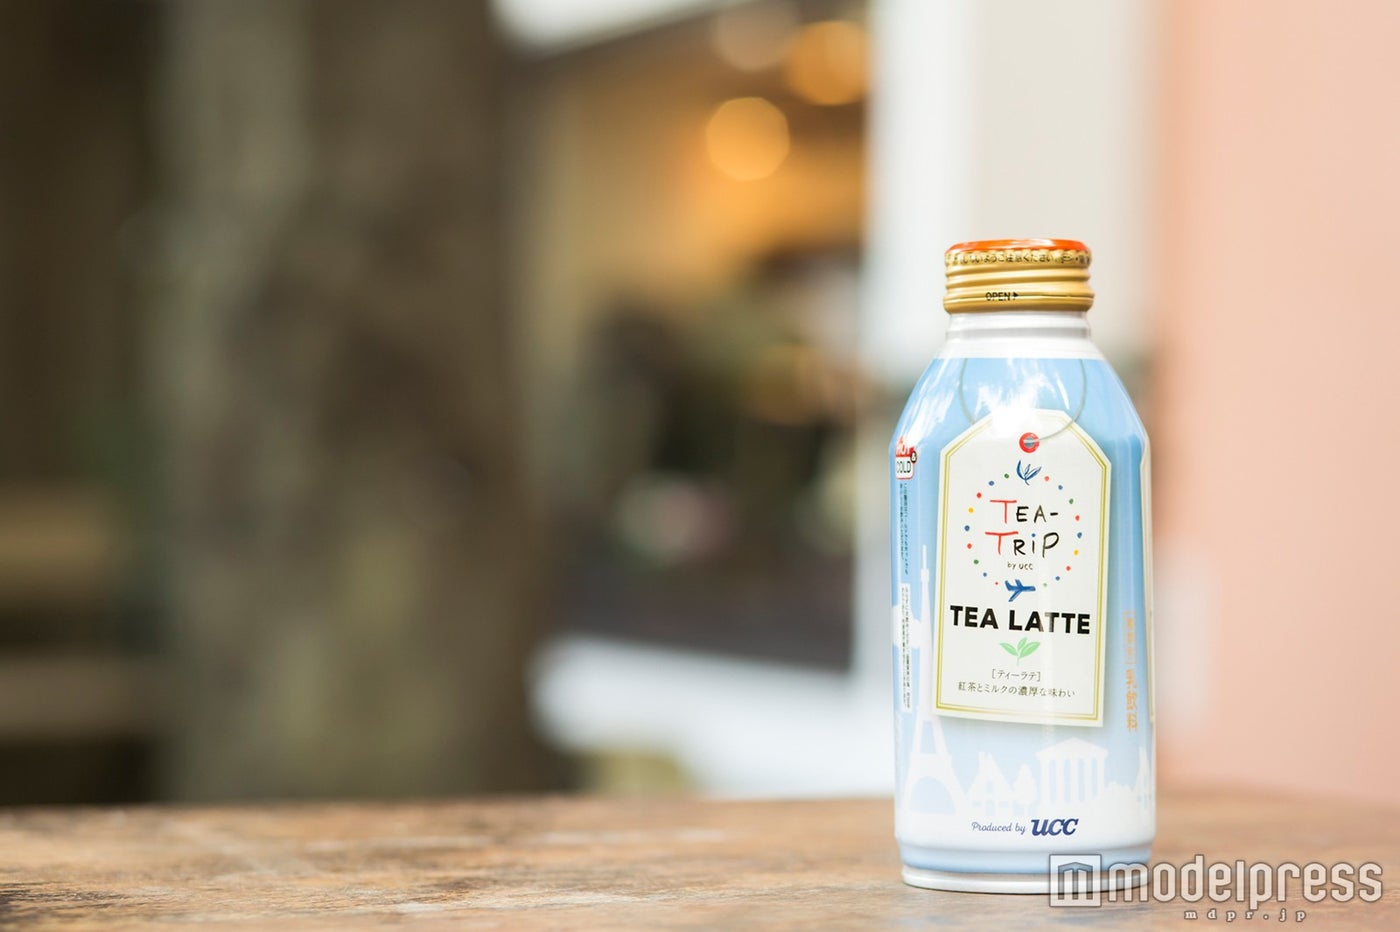 TEA-TRiP TEA LATTE／爽やかな秋晴れの空のようなブルーの缶